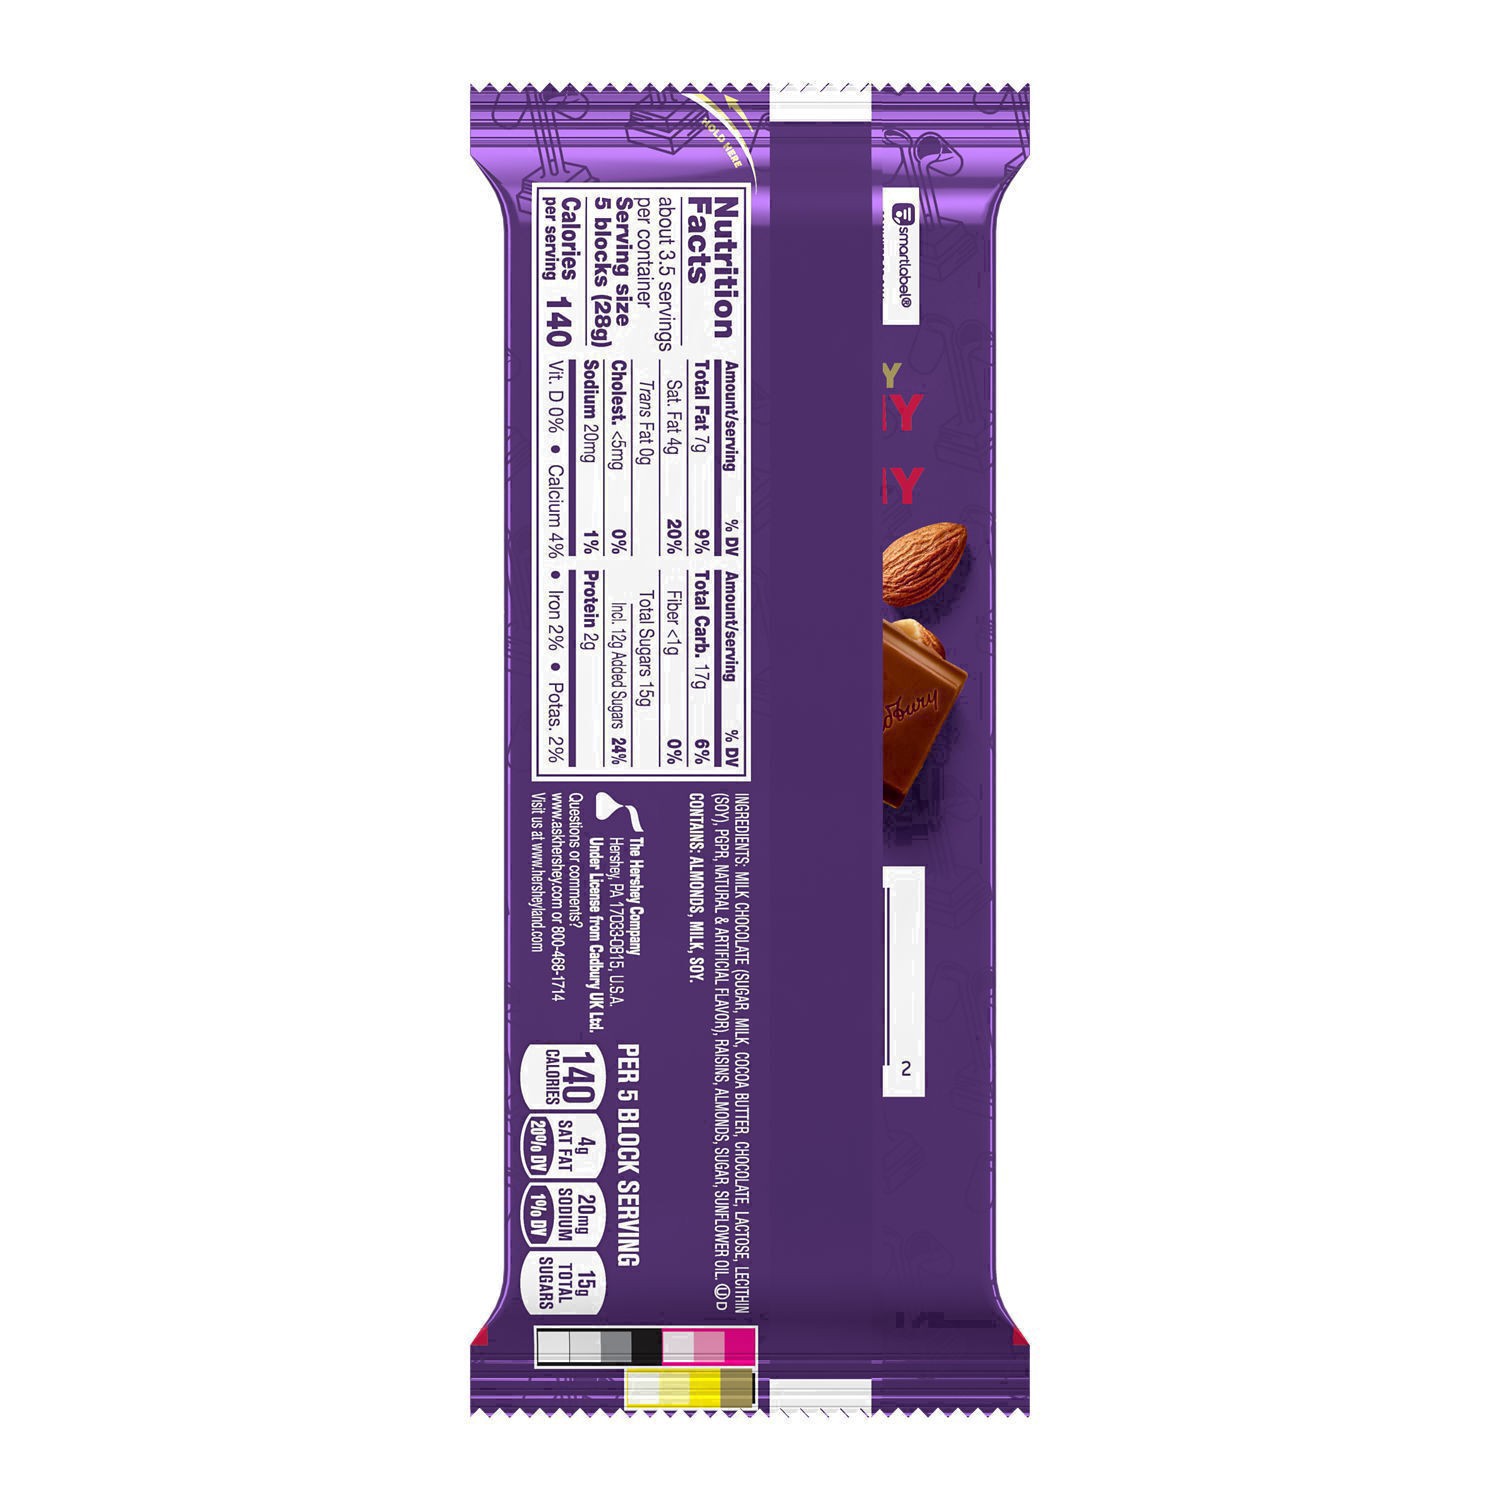 slide 65 of 72, Cadbury DAIRY MILK Fruit & Nut Milk Chocolate Candy Bar, 3.5 oz, 3.5 oz